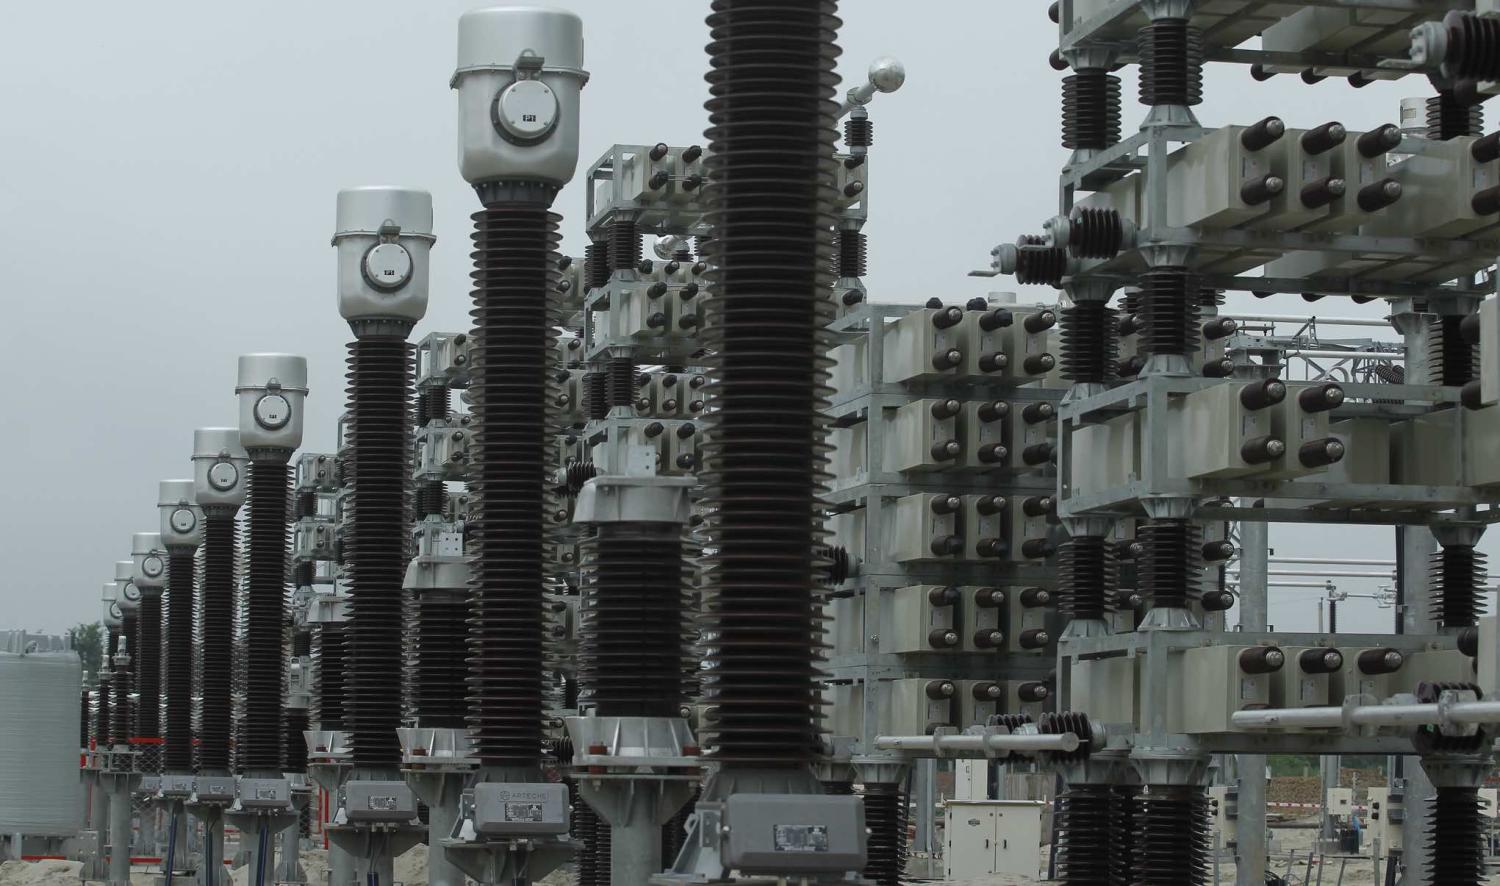 Electricity pylons in Bangladesh (Photo: Asian Development Bank/Flickr)